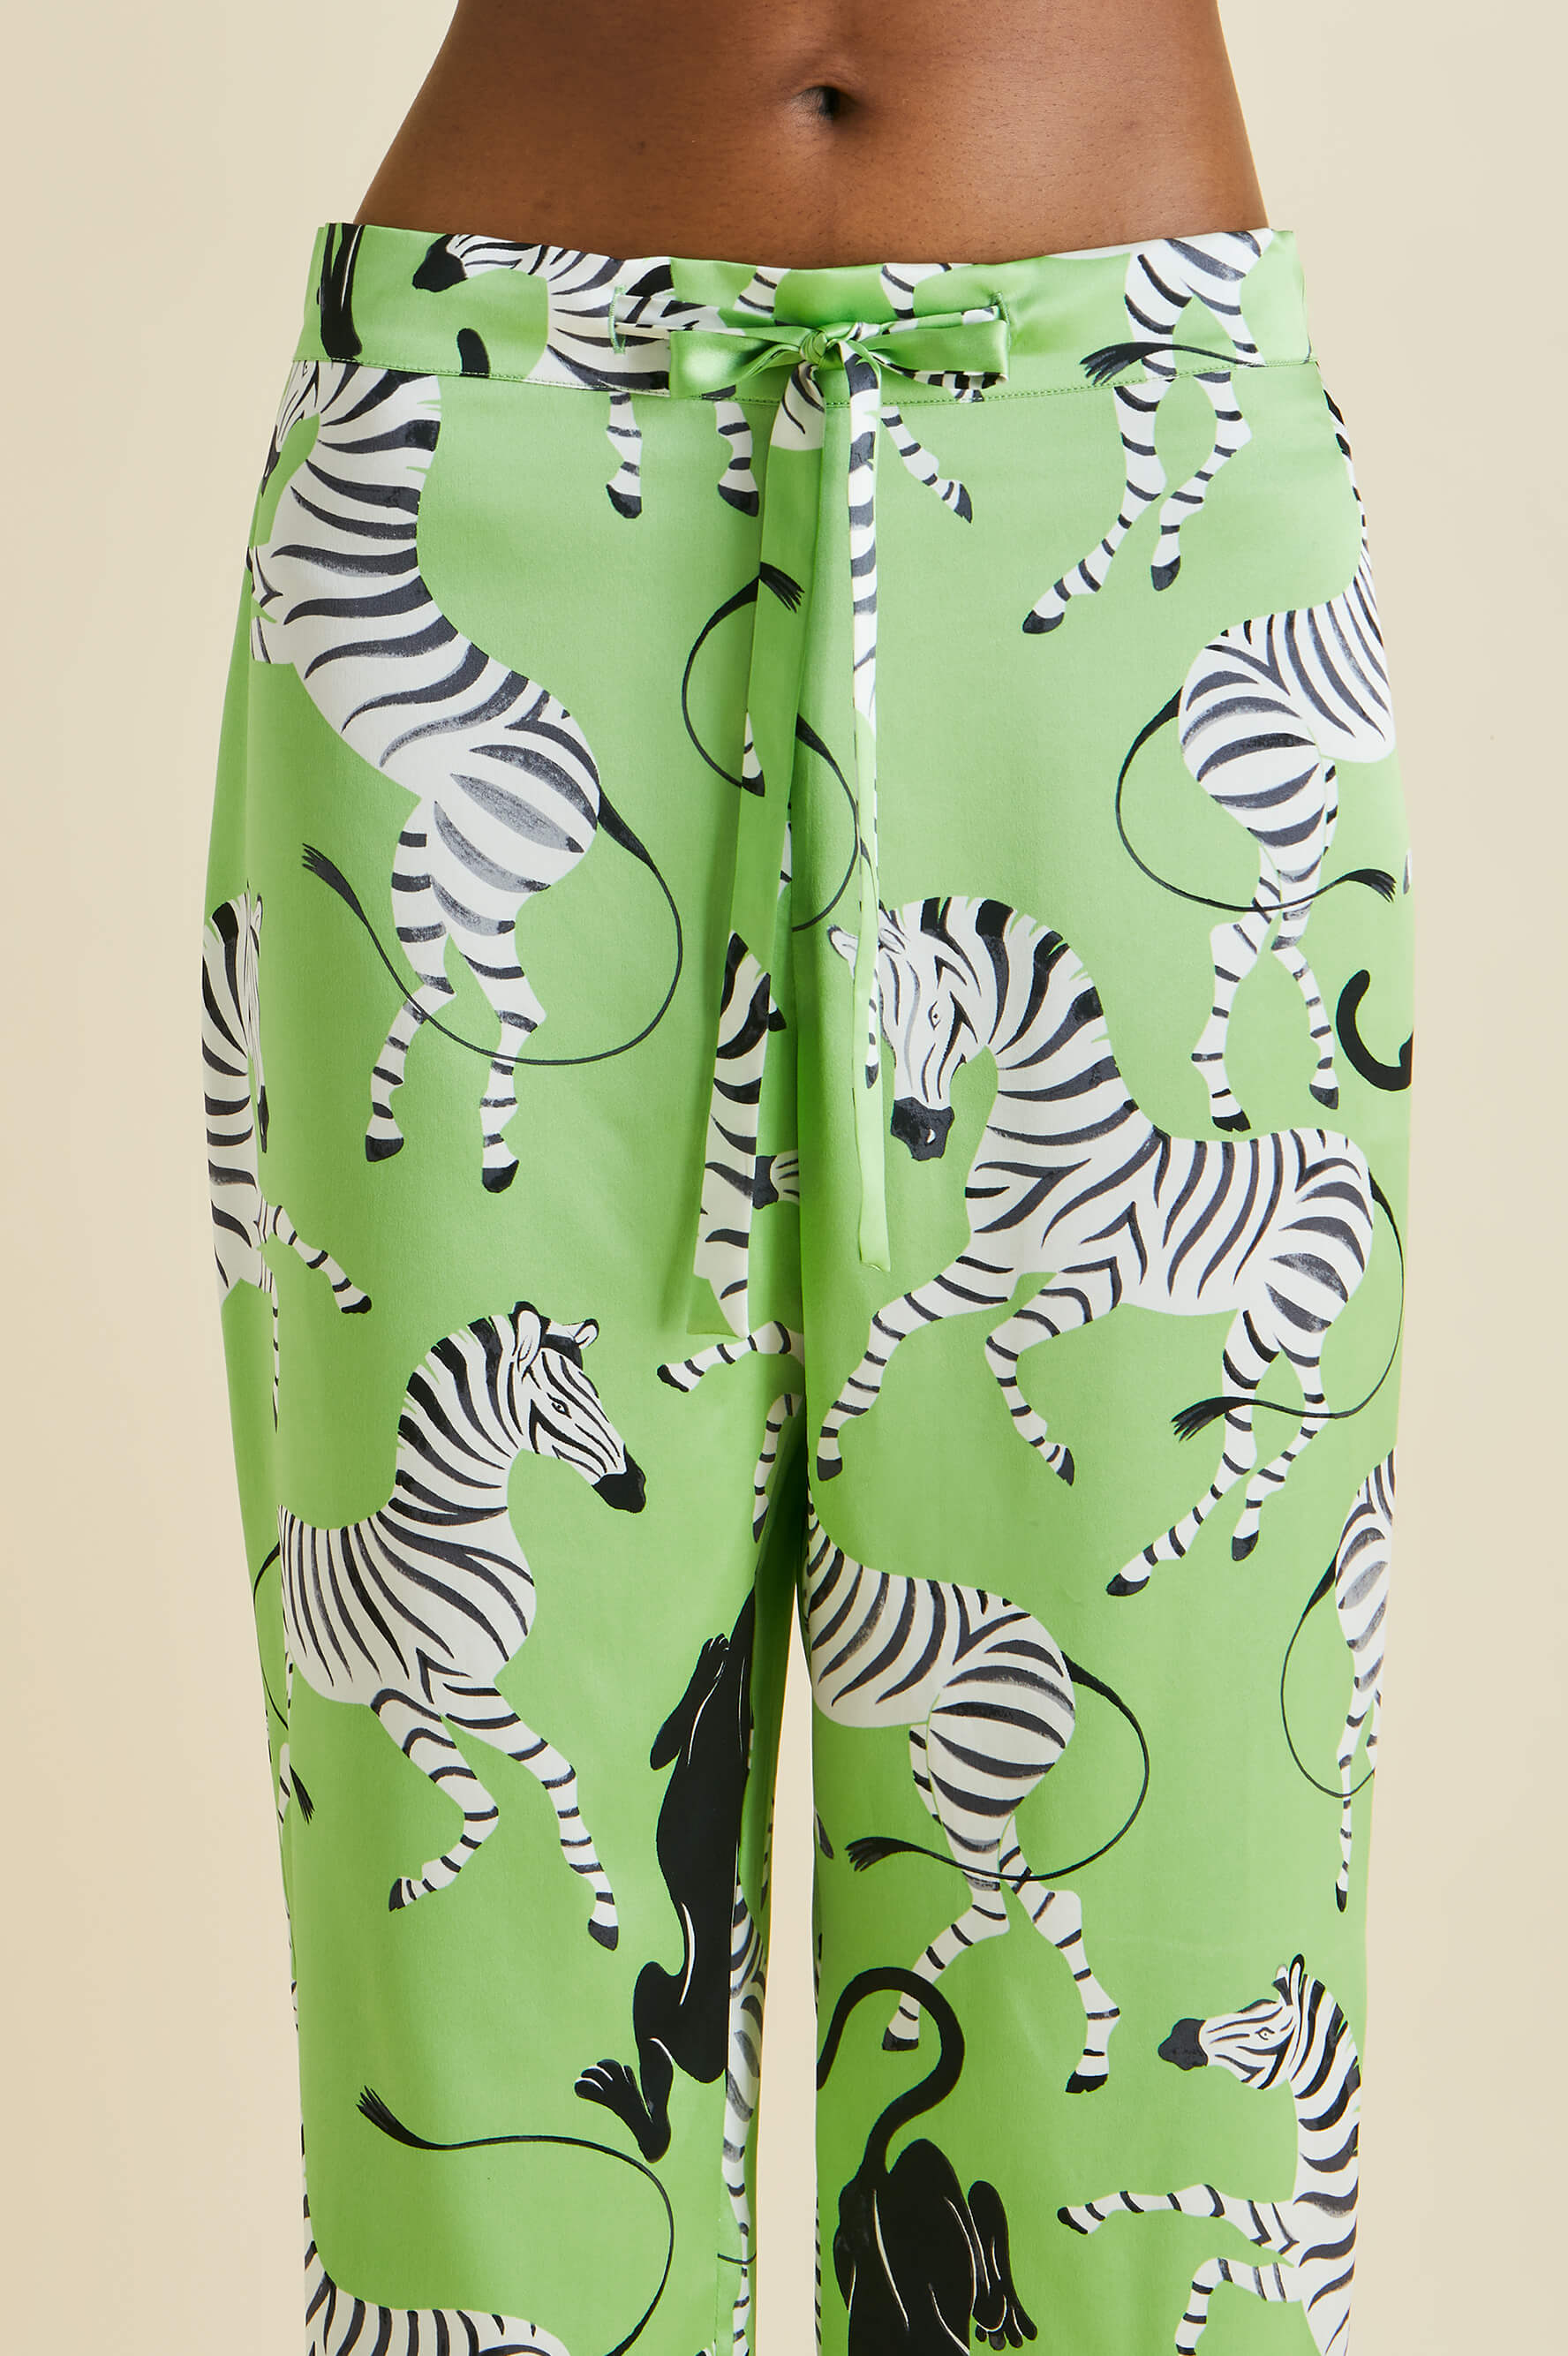 Green LV Inspired Pajamas – Chloe E. LLC